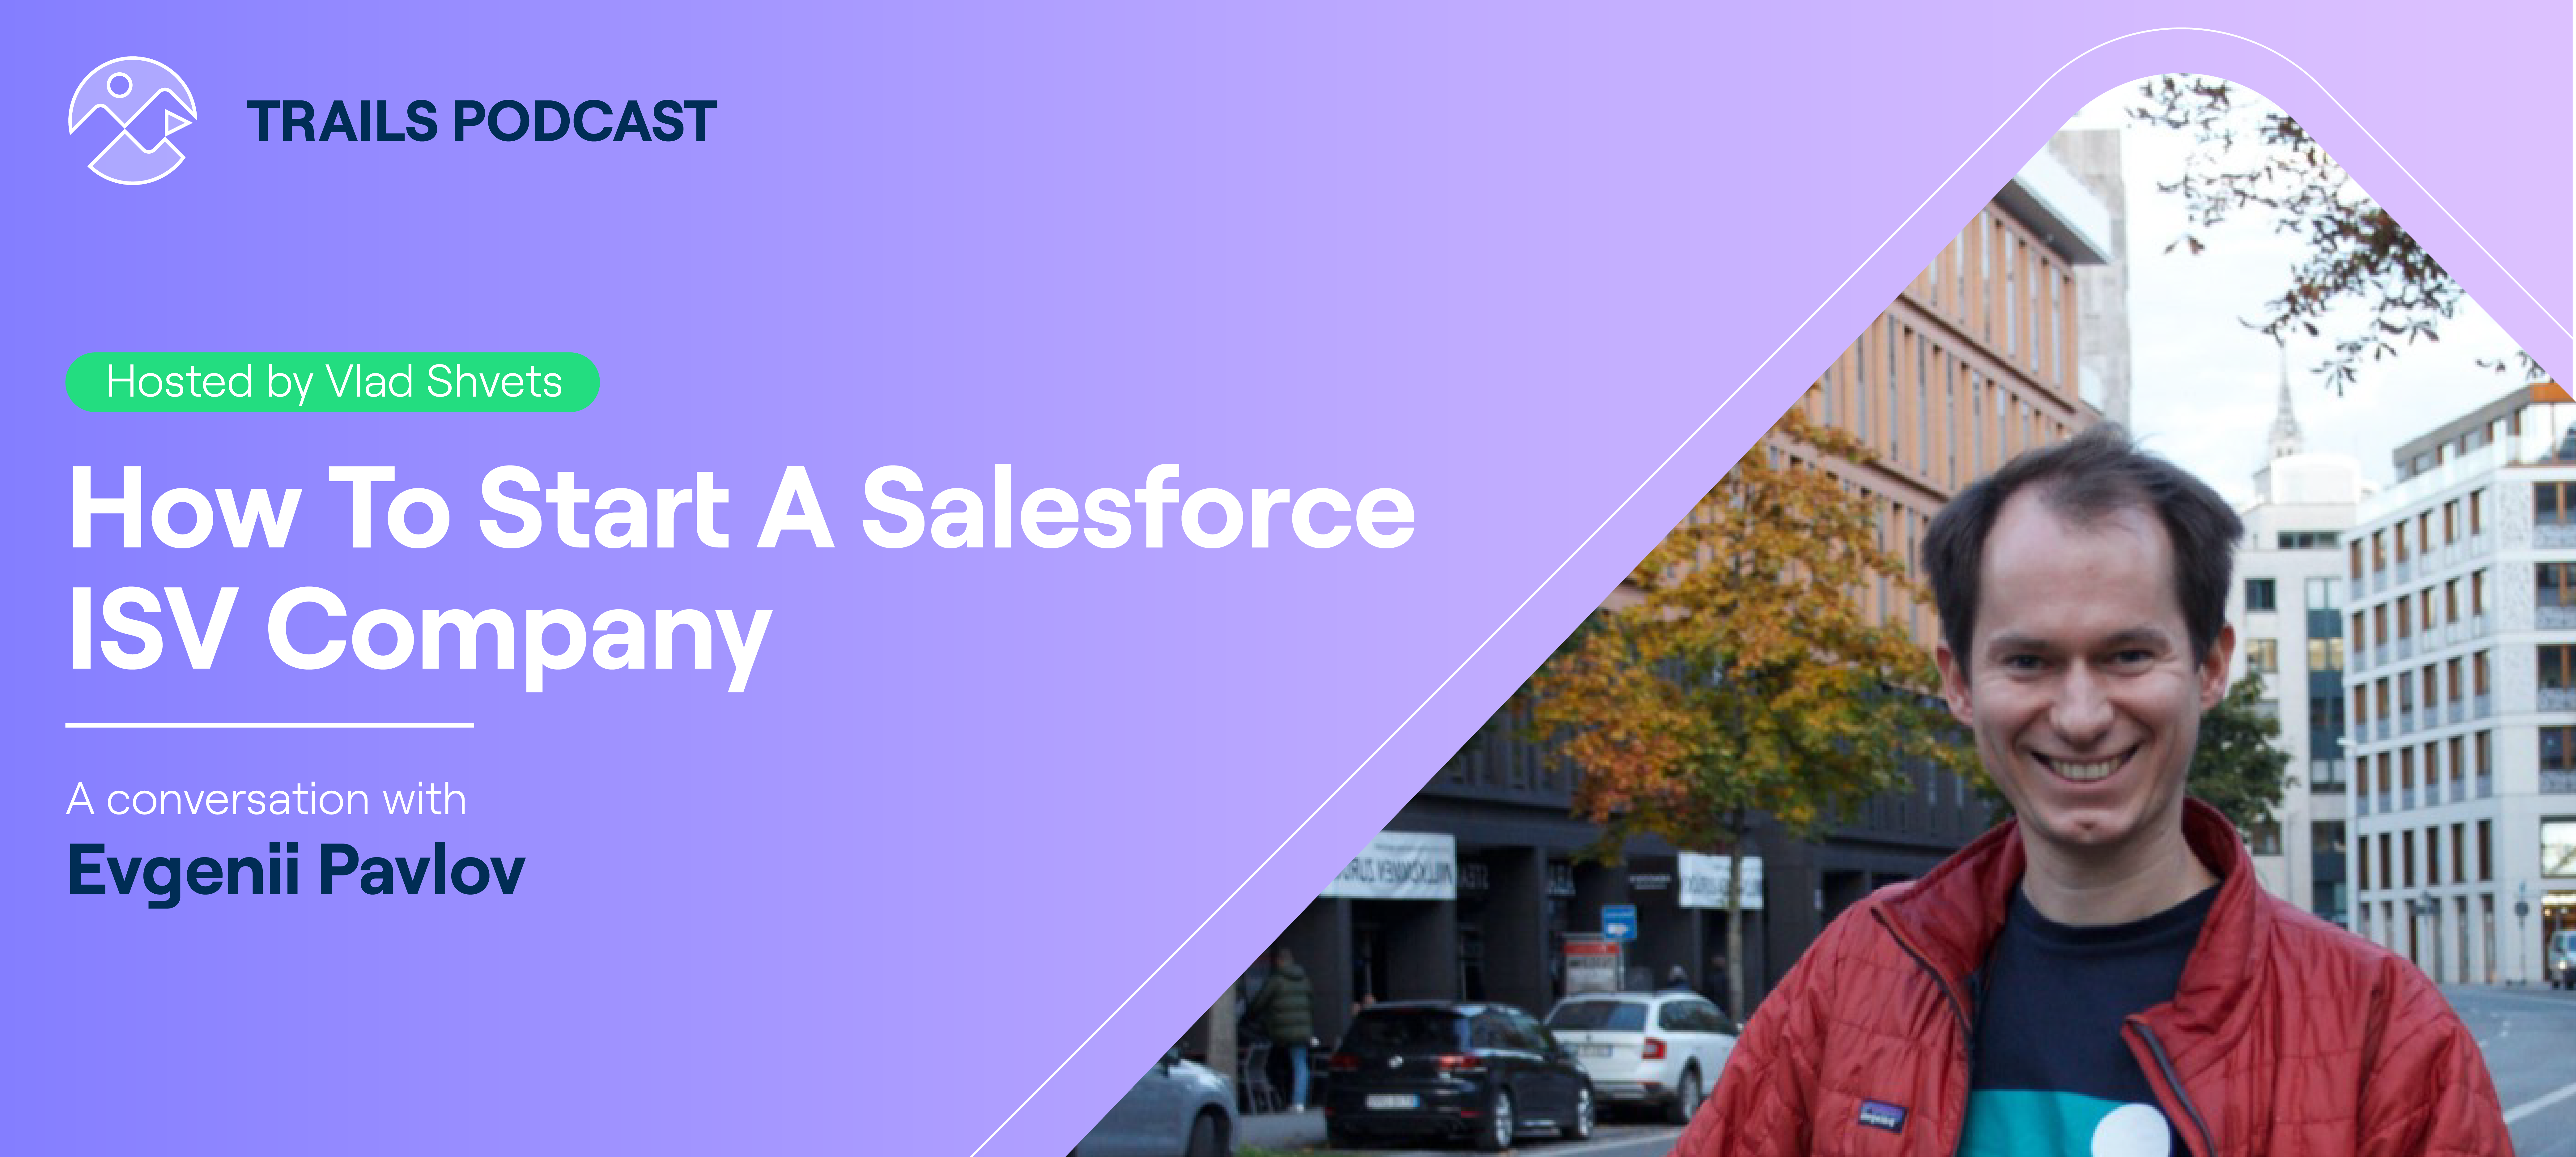 How To Start A Salesforce ISV Company (Trails Podcast Episode #2 With Evgenii Pavlov)